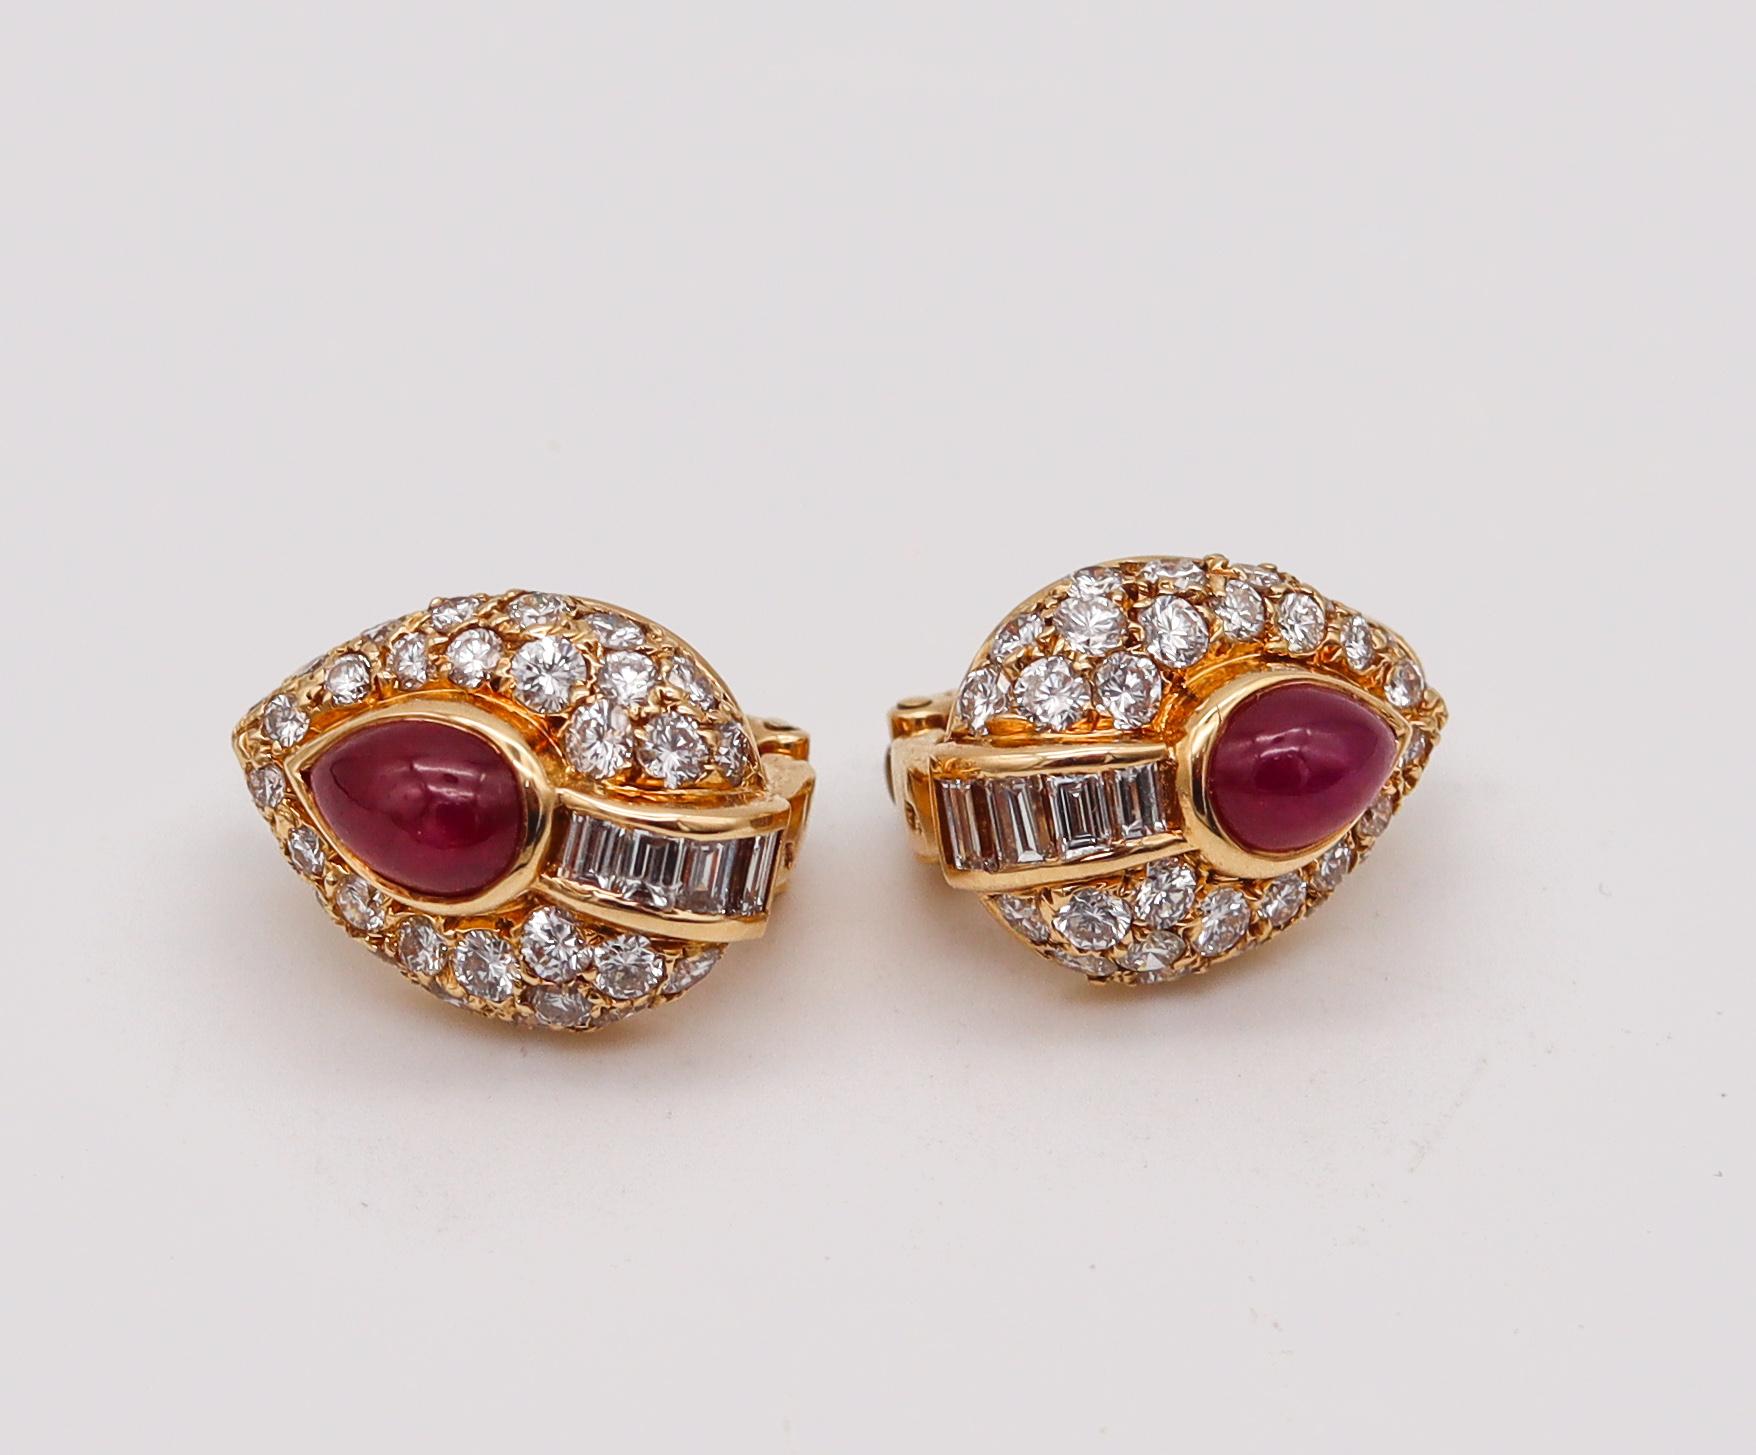 Modern Cartier George L'enfant Earrings 18Kt Gold 5.44 Cts of Burmese Rubies & Diamonds